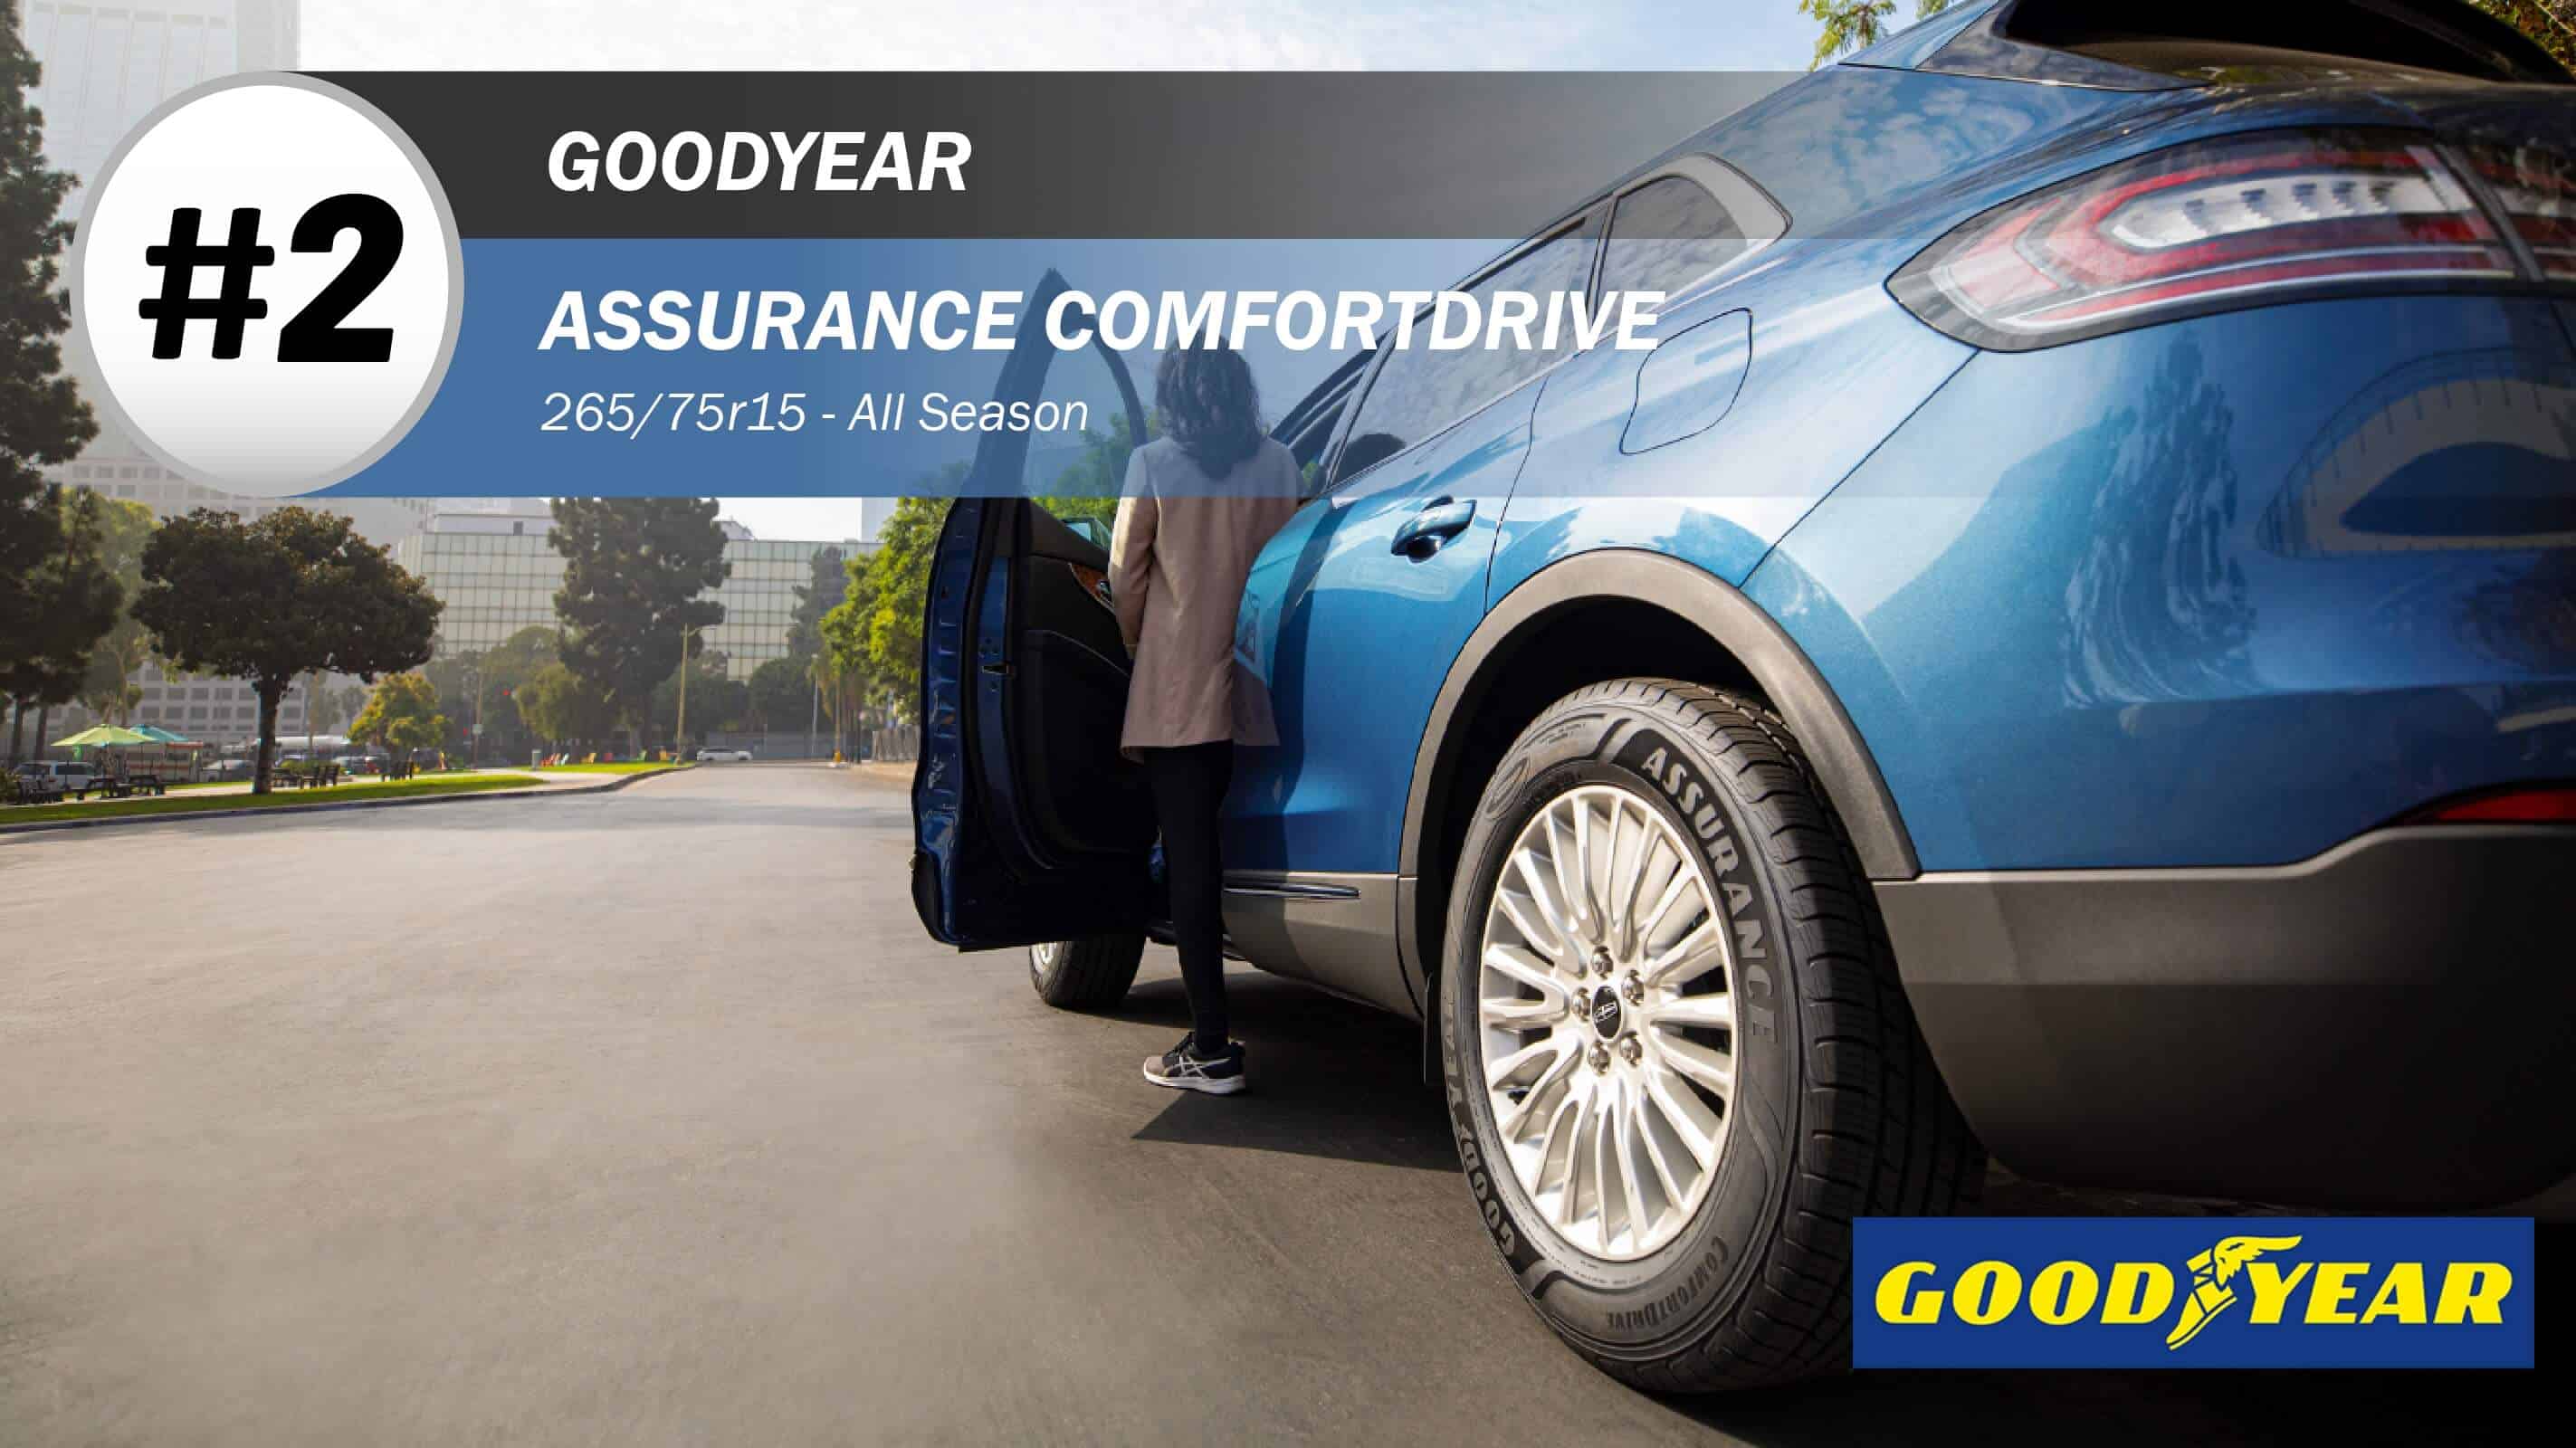 Top #2 All Season Tires: Goodyear Assurance Comfortdrive – 265/75R15